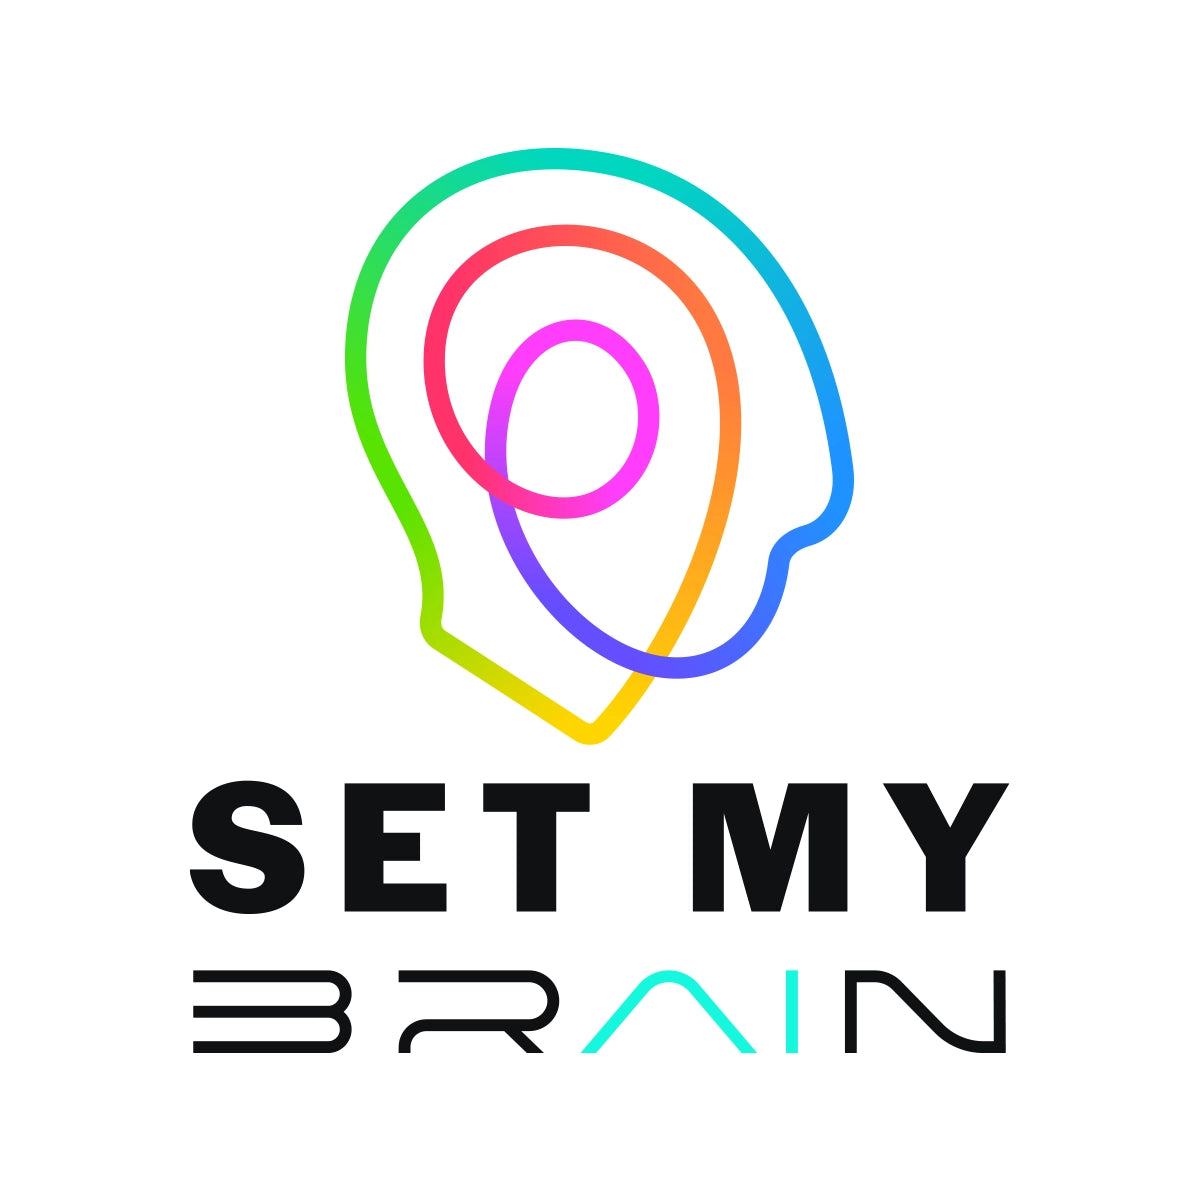 setmybrain.com